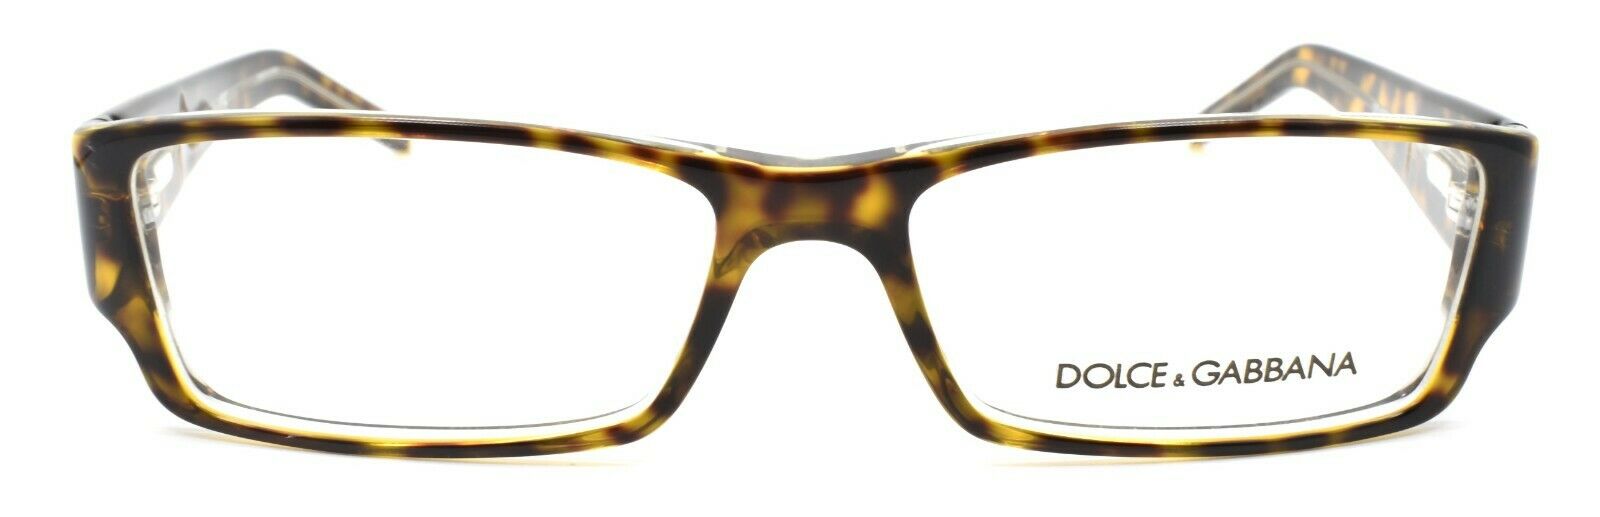 2-Dolce & Gabbana DD1150 556 Women's Eyeglasses Frames 53-15-135 Havana-679420252056-IKSpecs